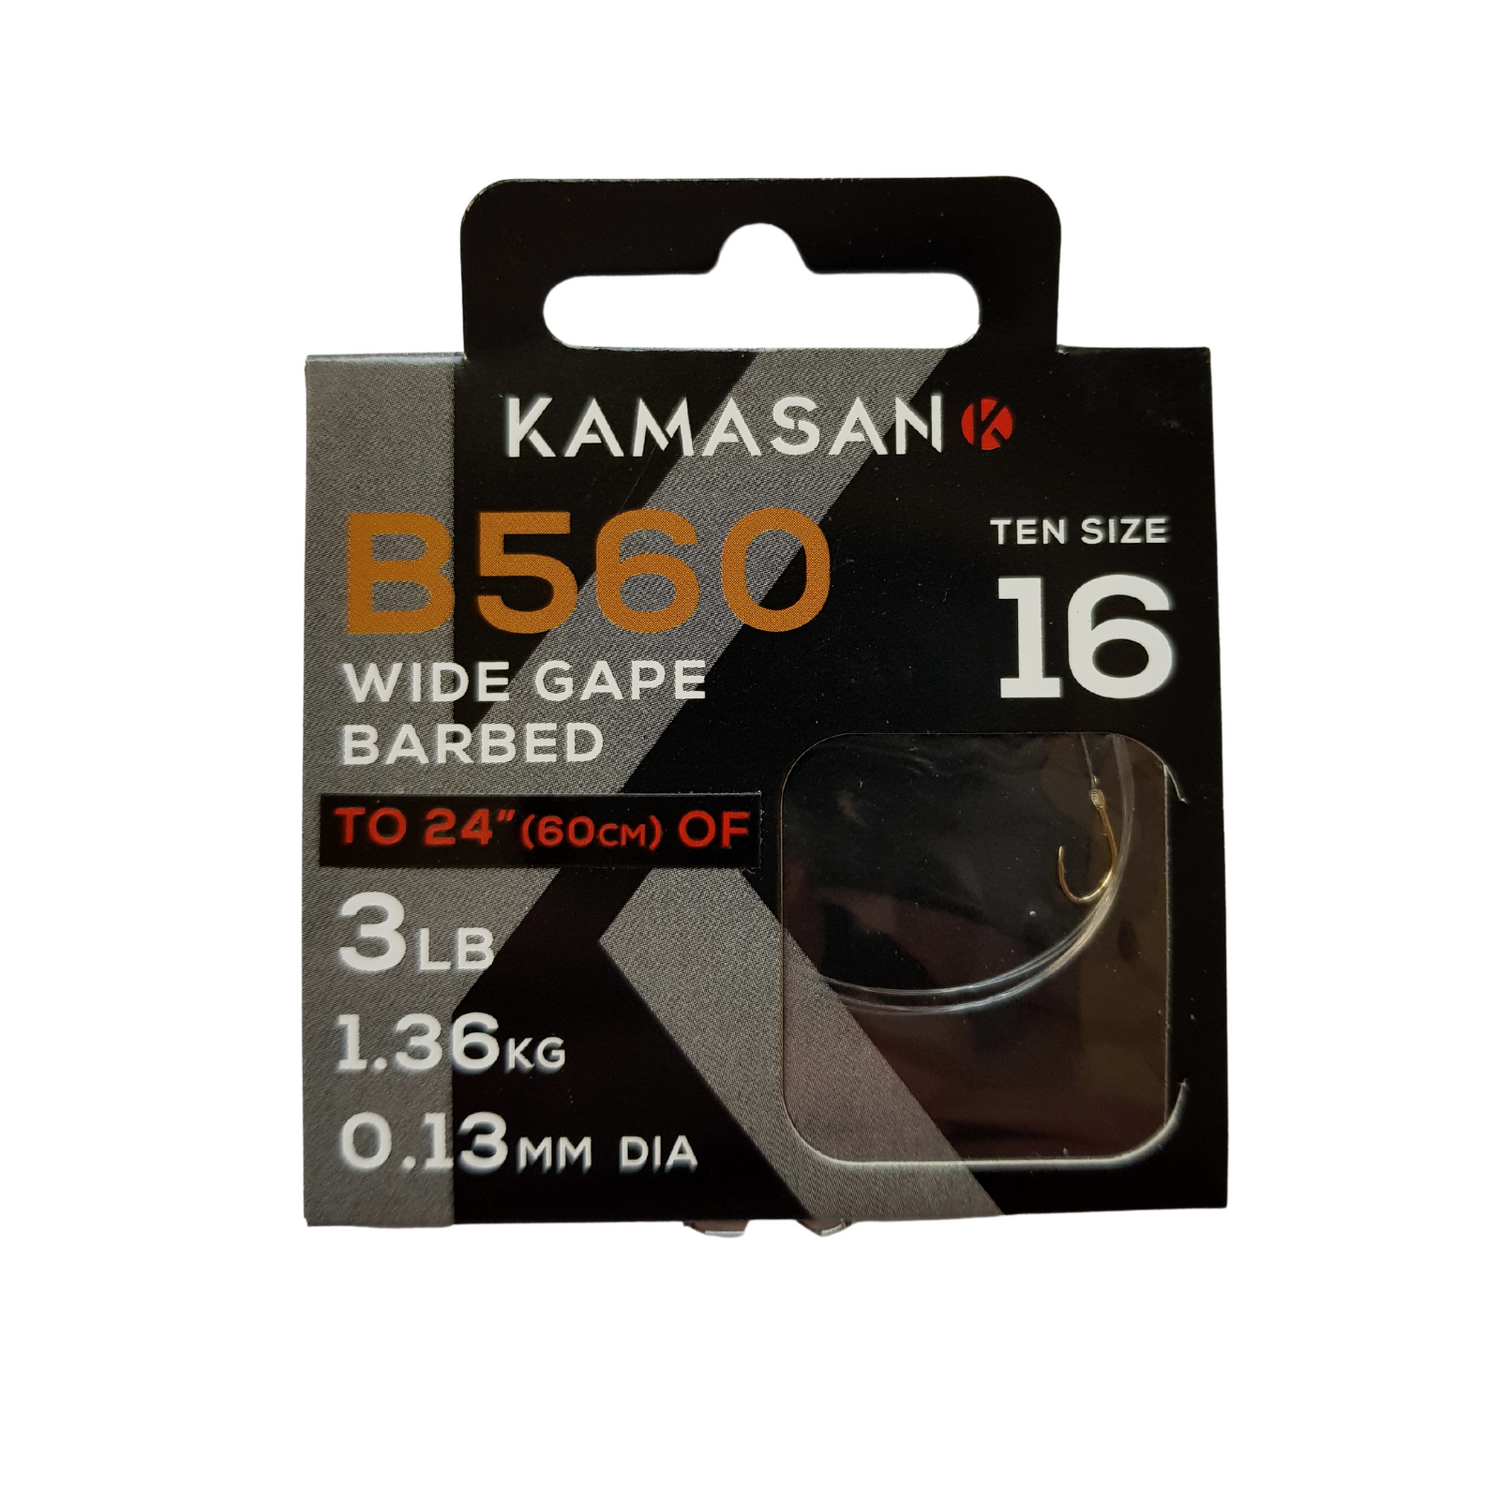 Kamasan B560 Hooks To Nylon 24" 60cm Size 16 - NEW IN!